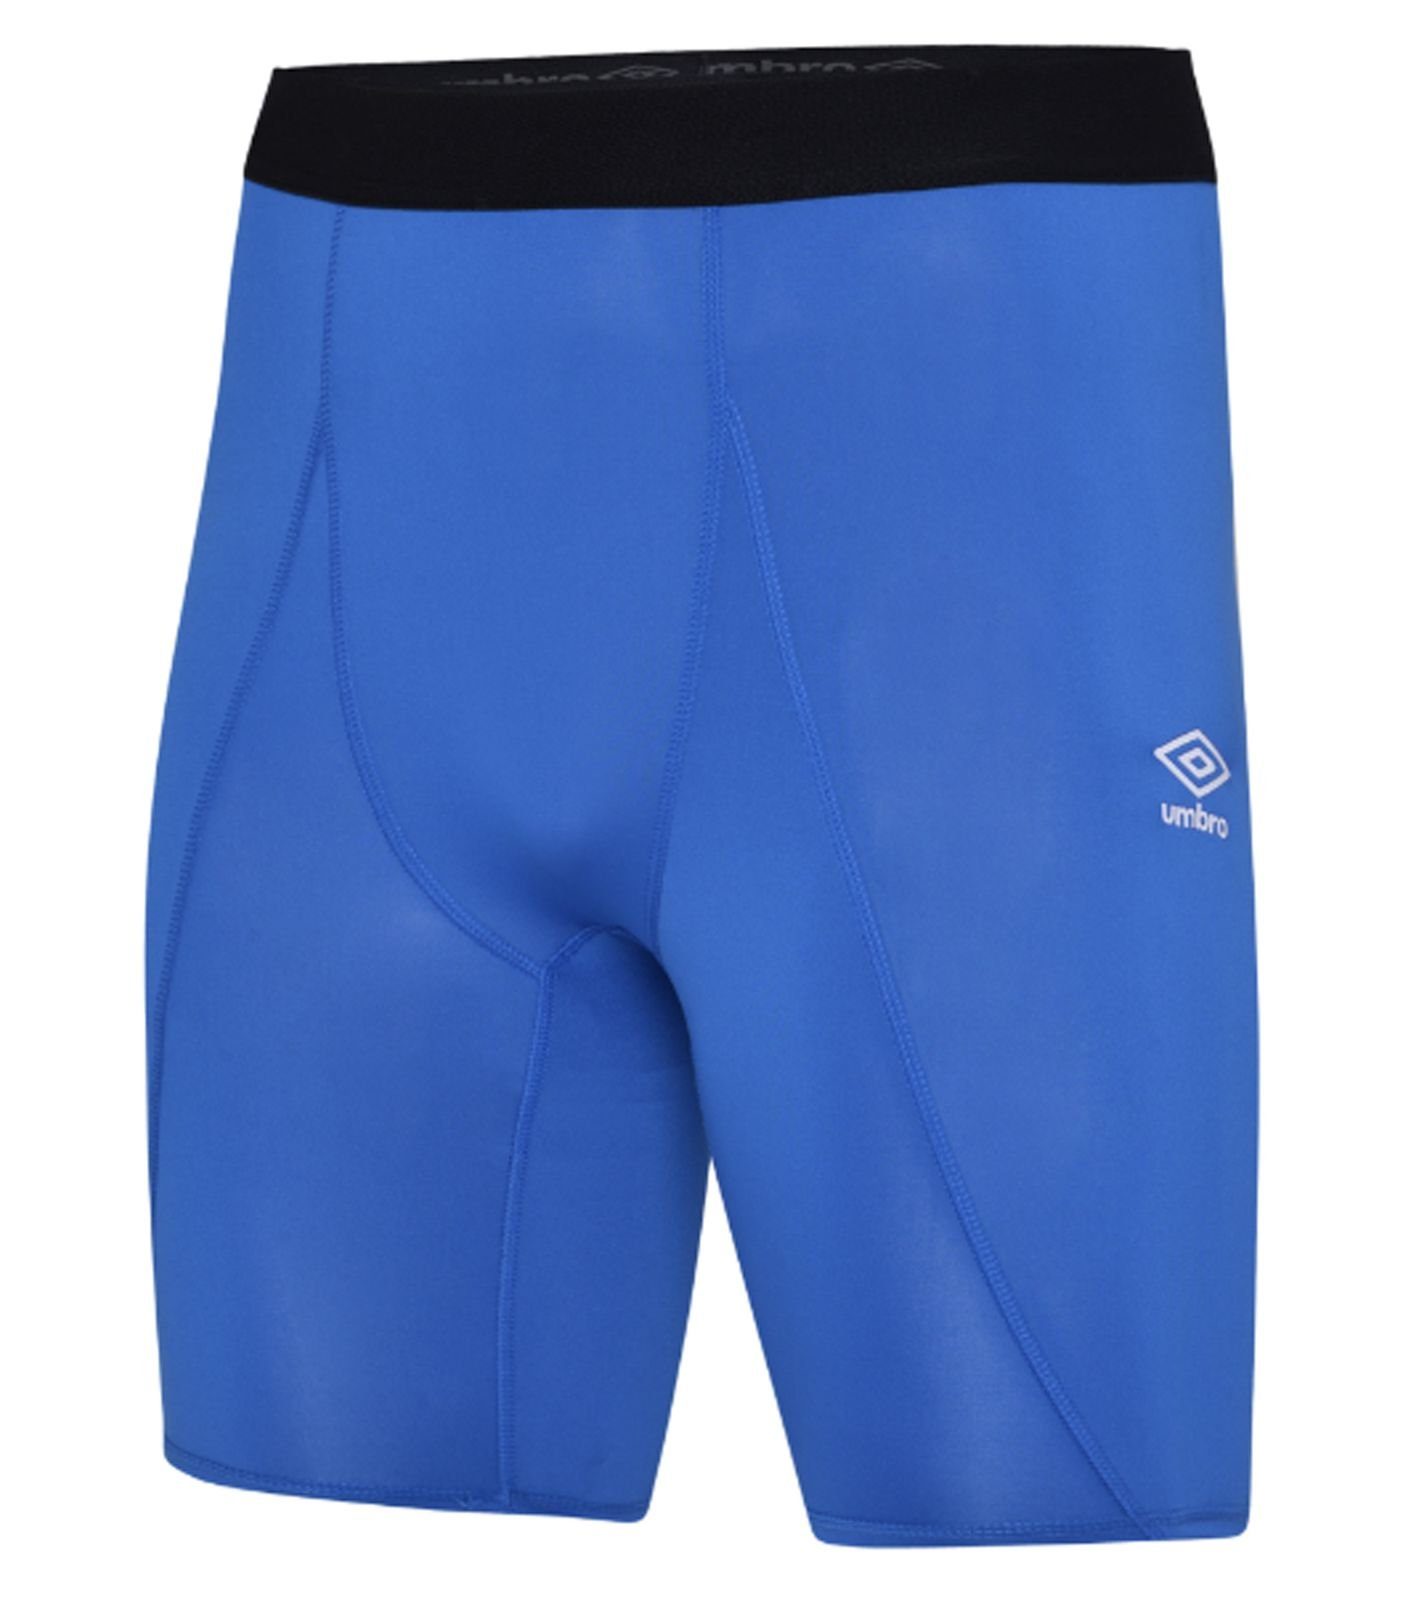 Power Core Funktions-Hose Umbro Shorts Herren Blau Sport-Shorts 64704U-EH2 Rad-Hose umbro Short bequeme